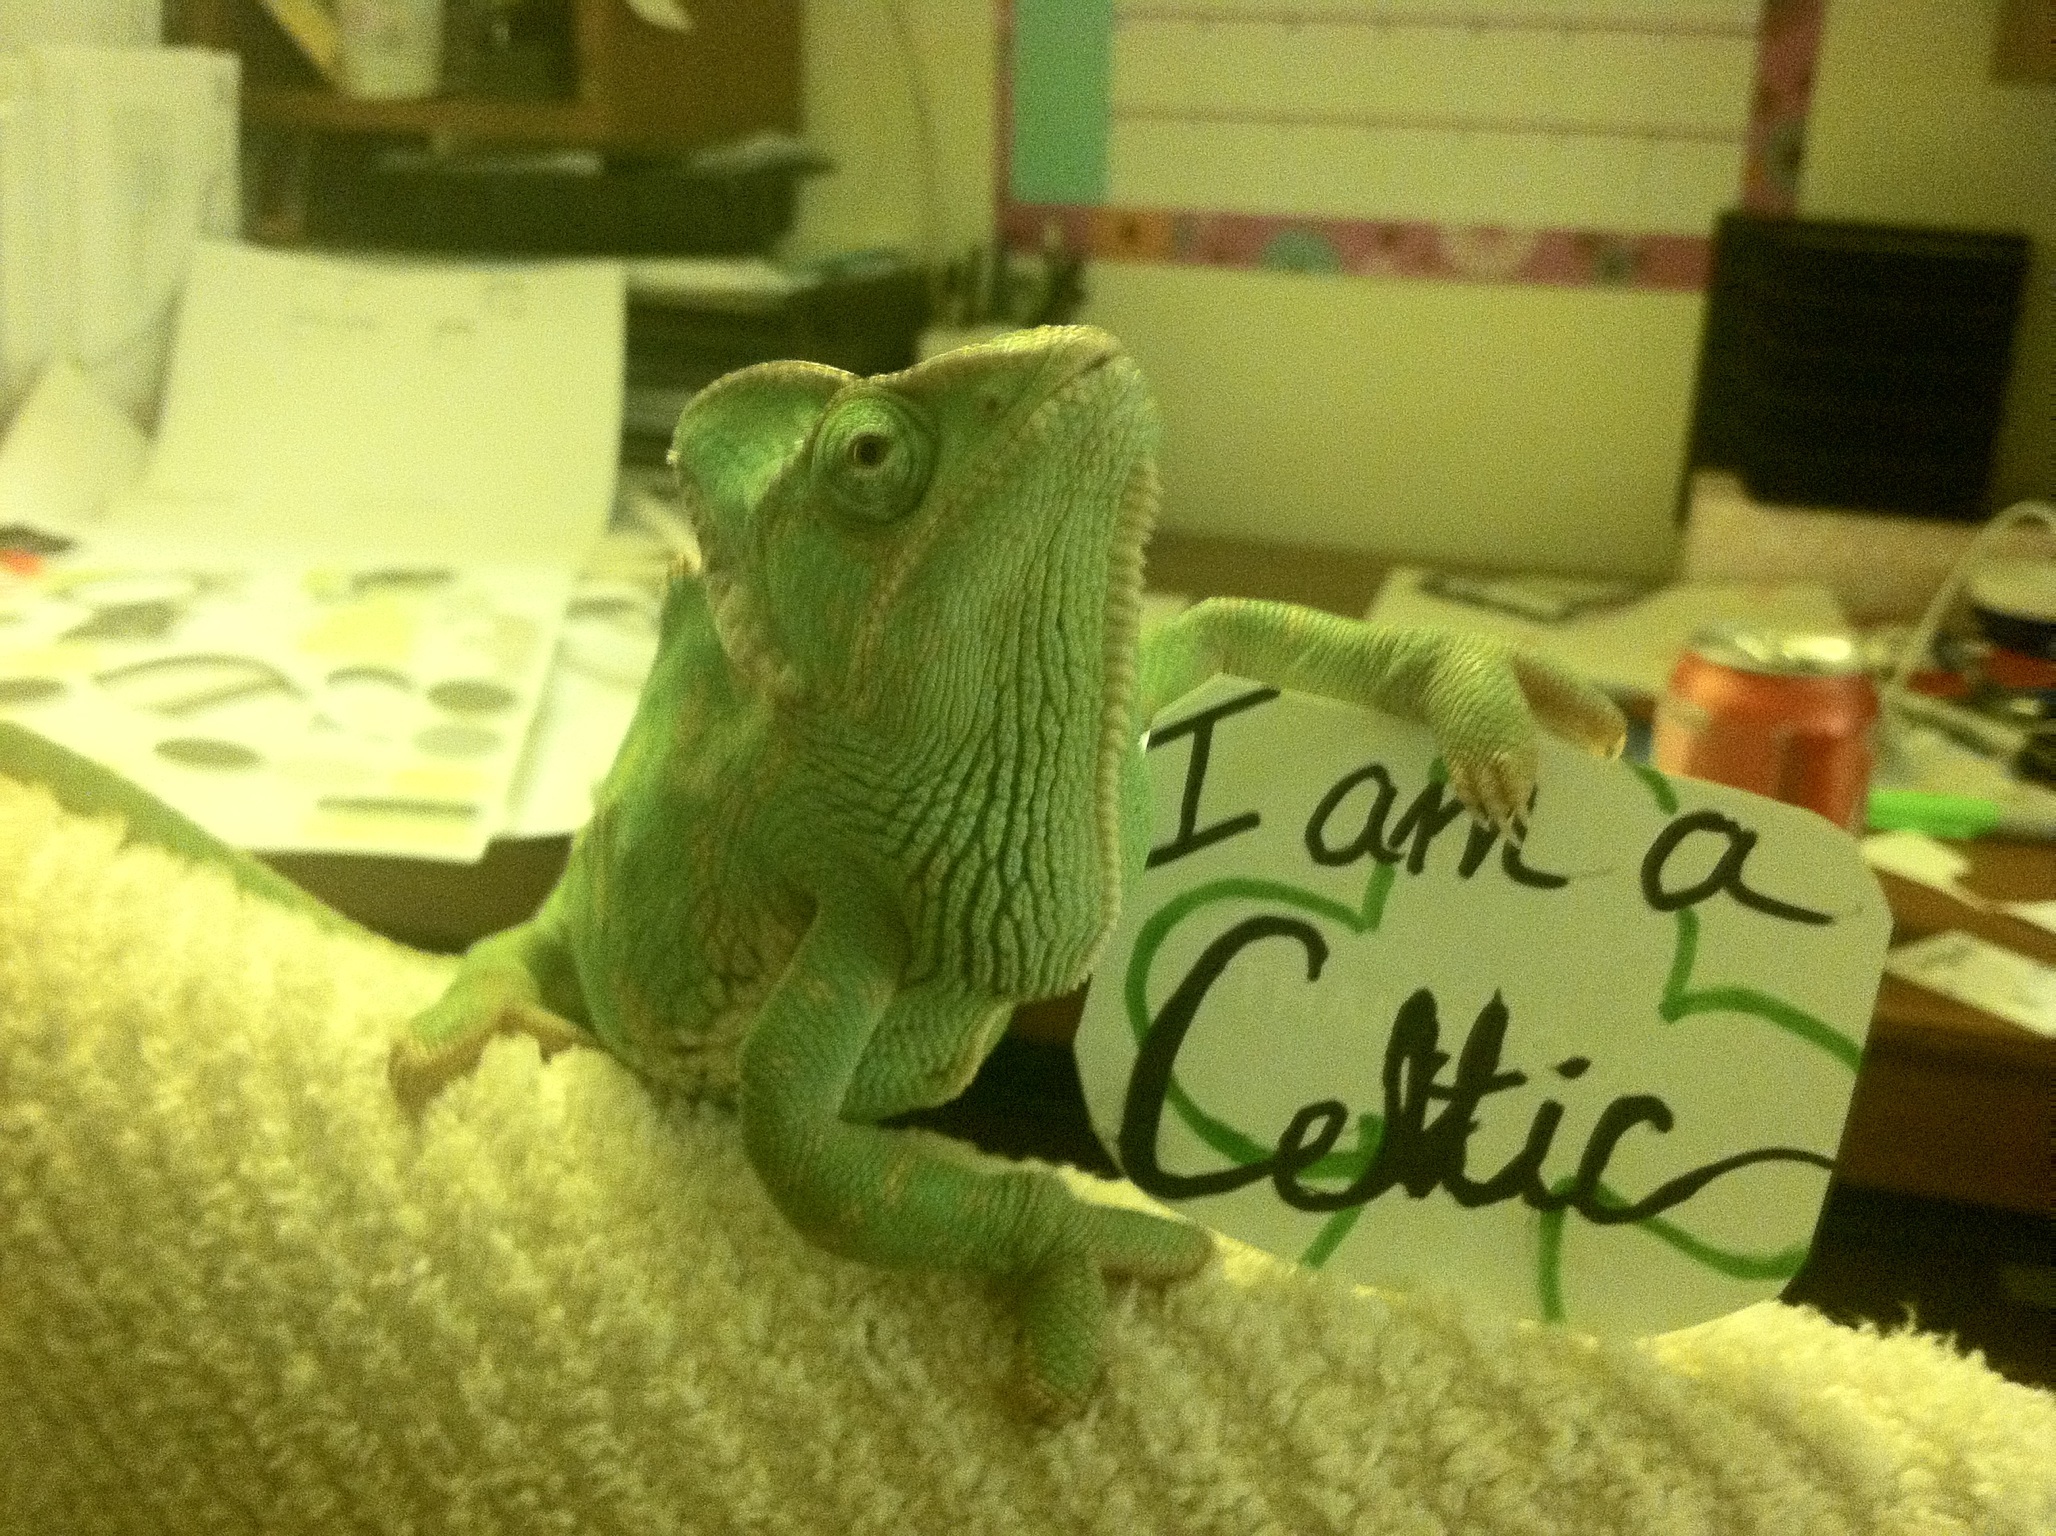 I Am A Celtic #2